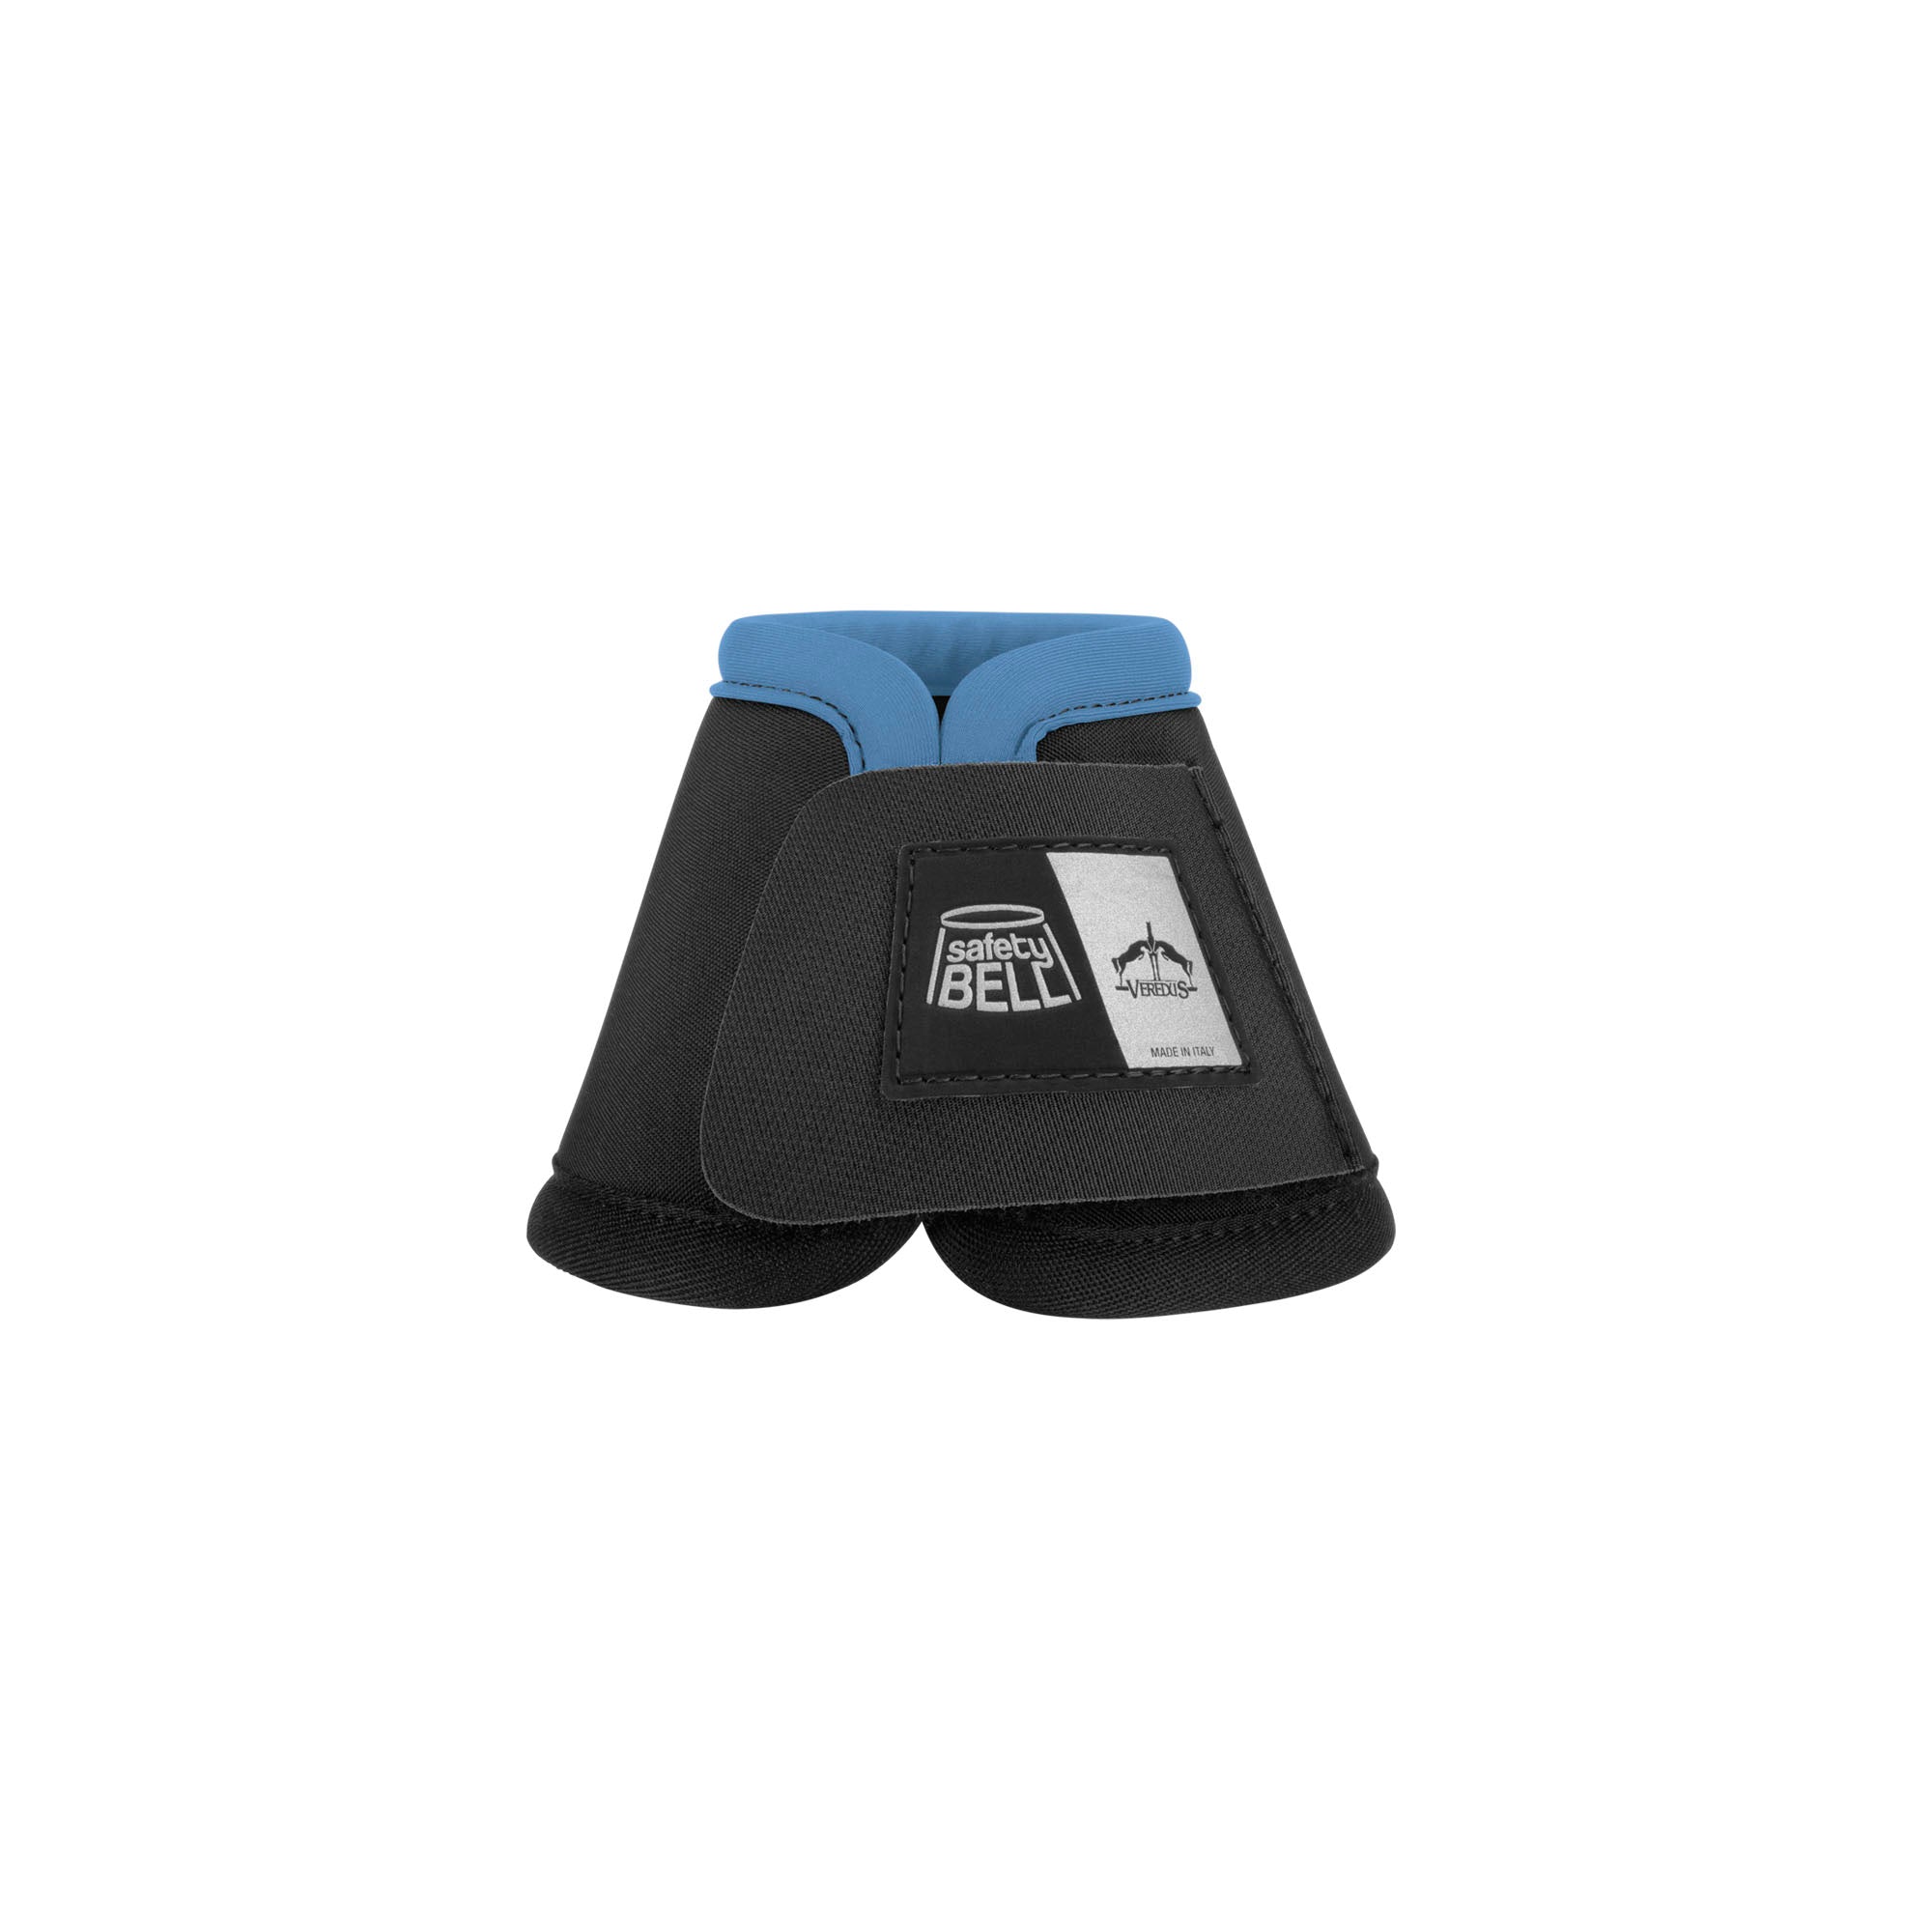 Verdus Light Safety Bell Boot -  Heel Protection -  Overeach  - Black/Light Blue